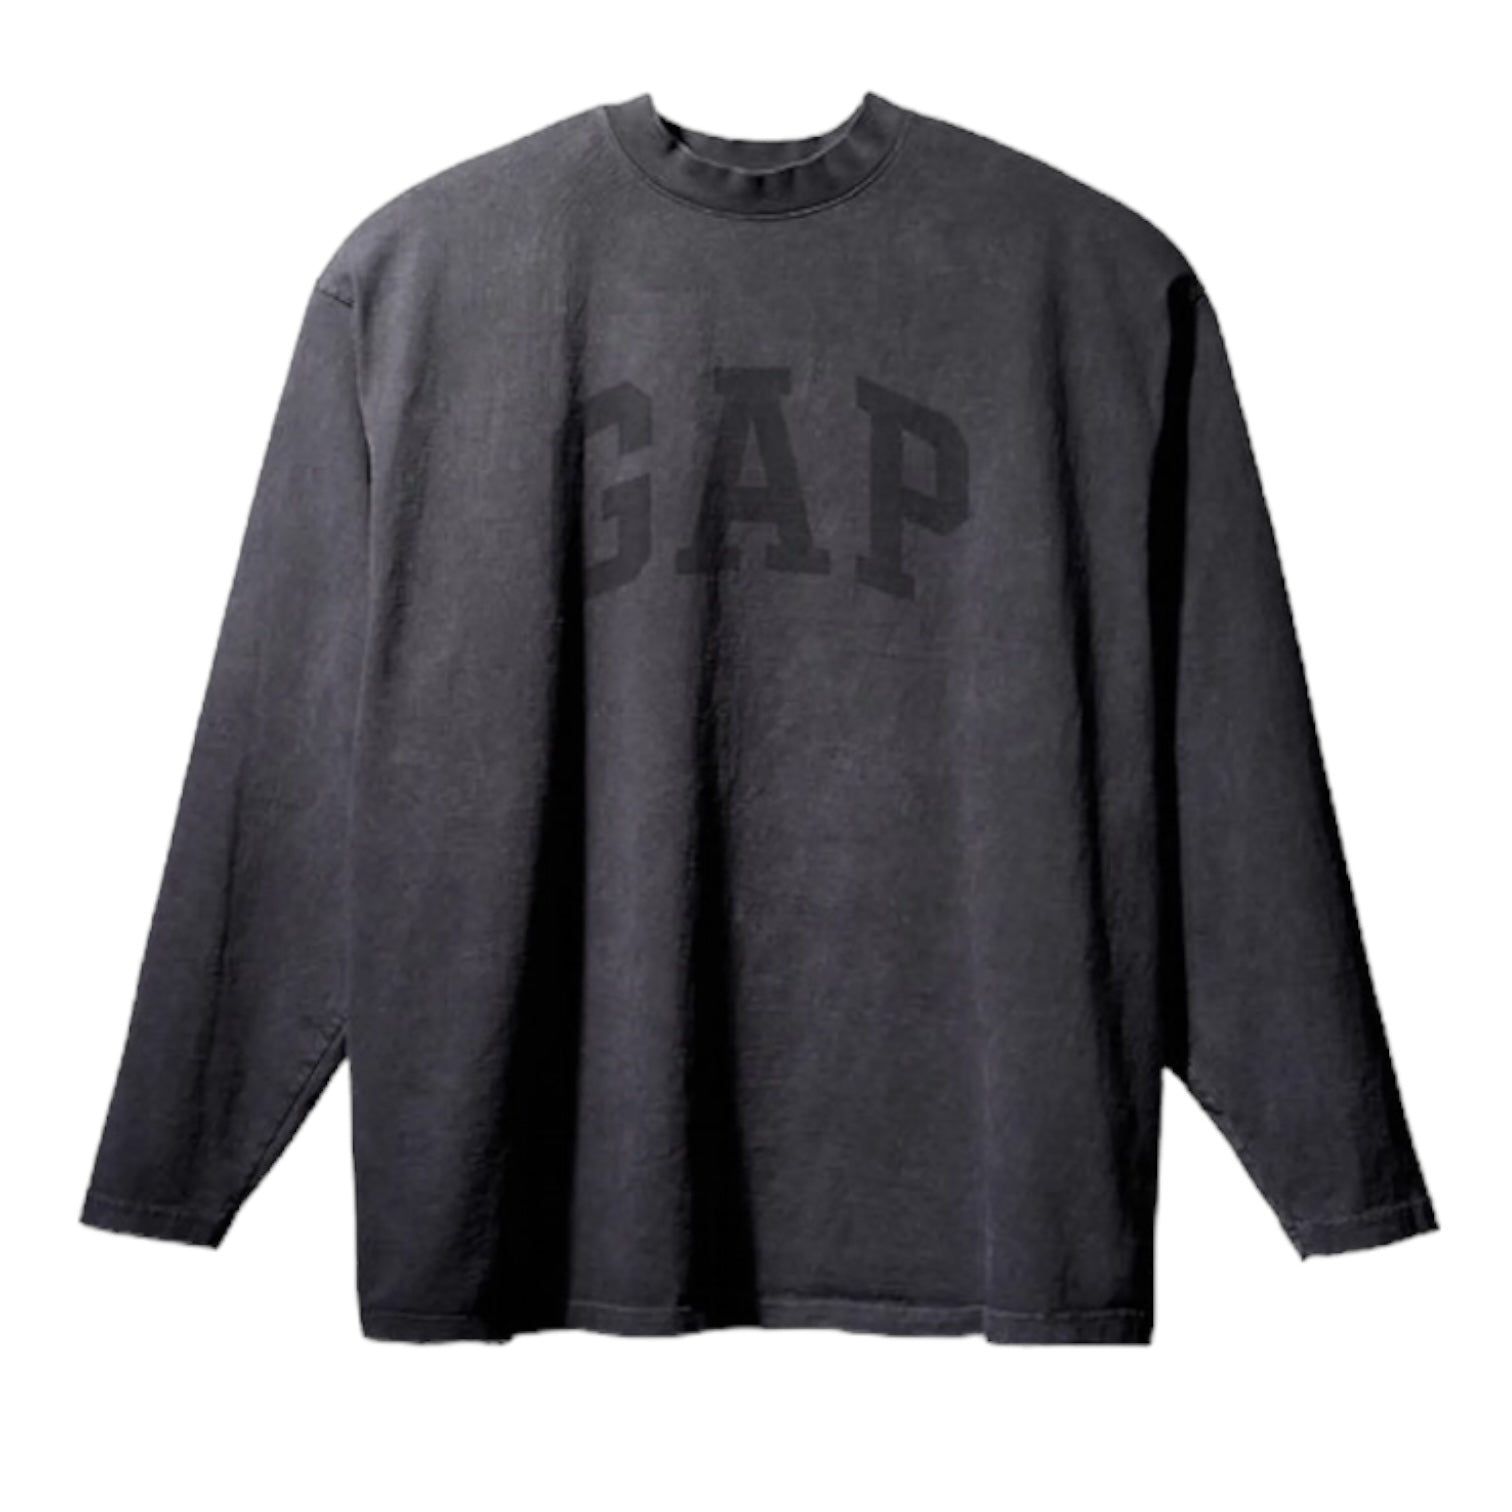 Yeezy Gap Engineered by Balenciaga No Seam Long Sleeve Black